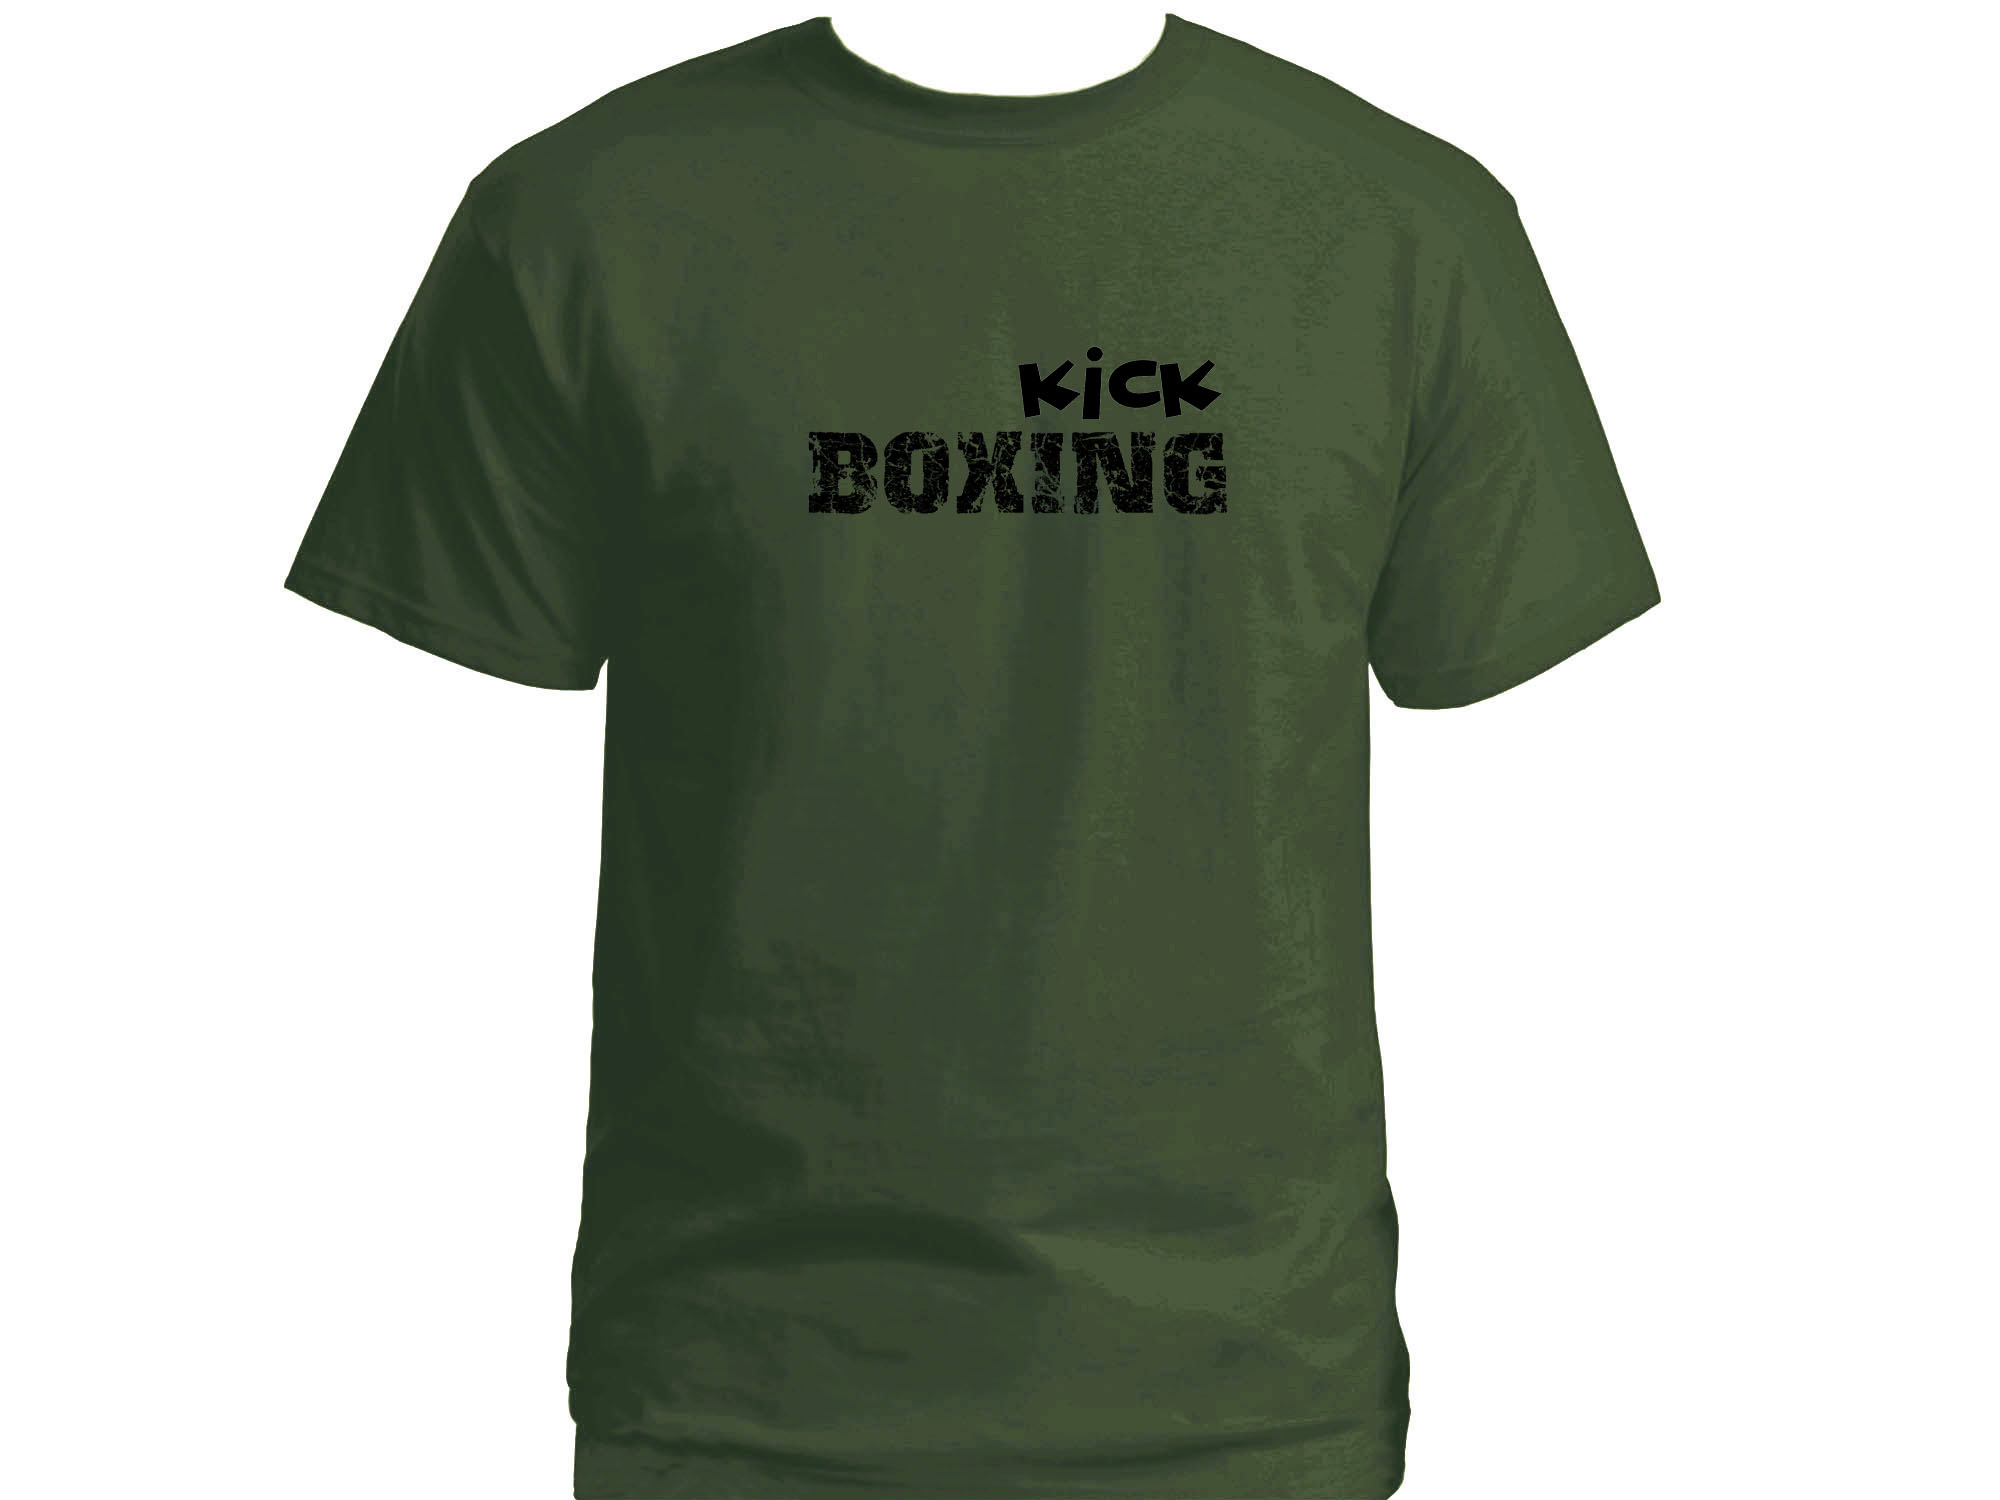 Kickboxing distressed print army green t-shirt